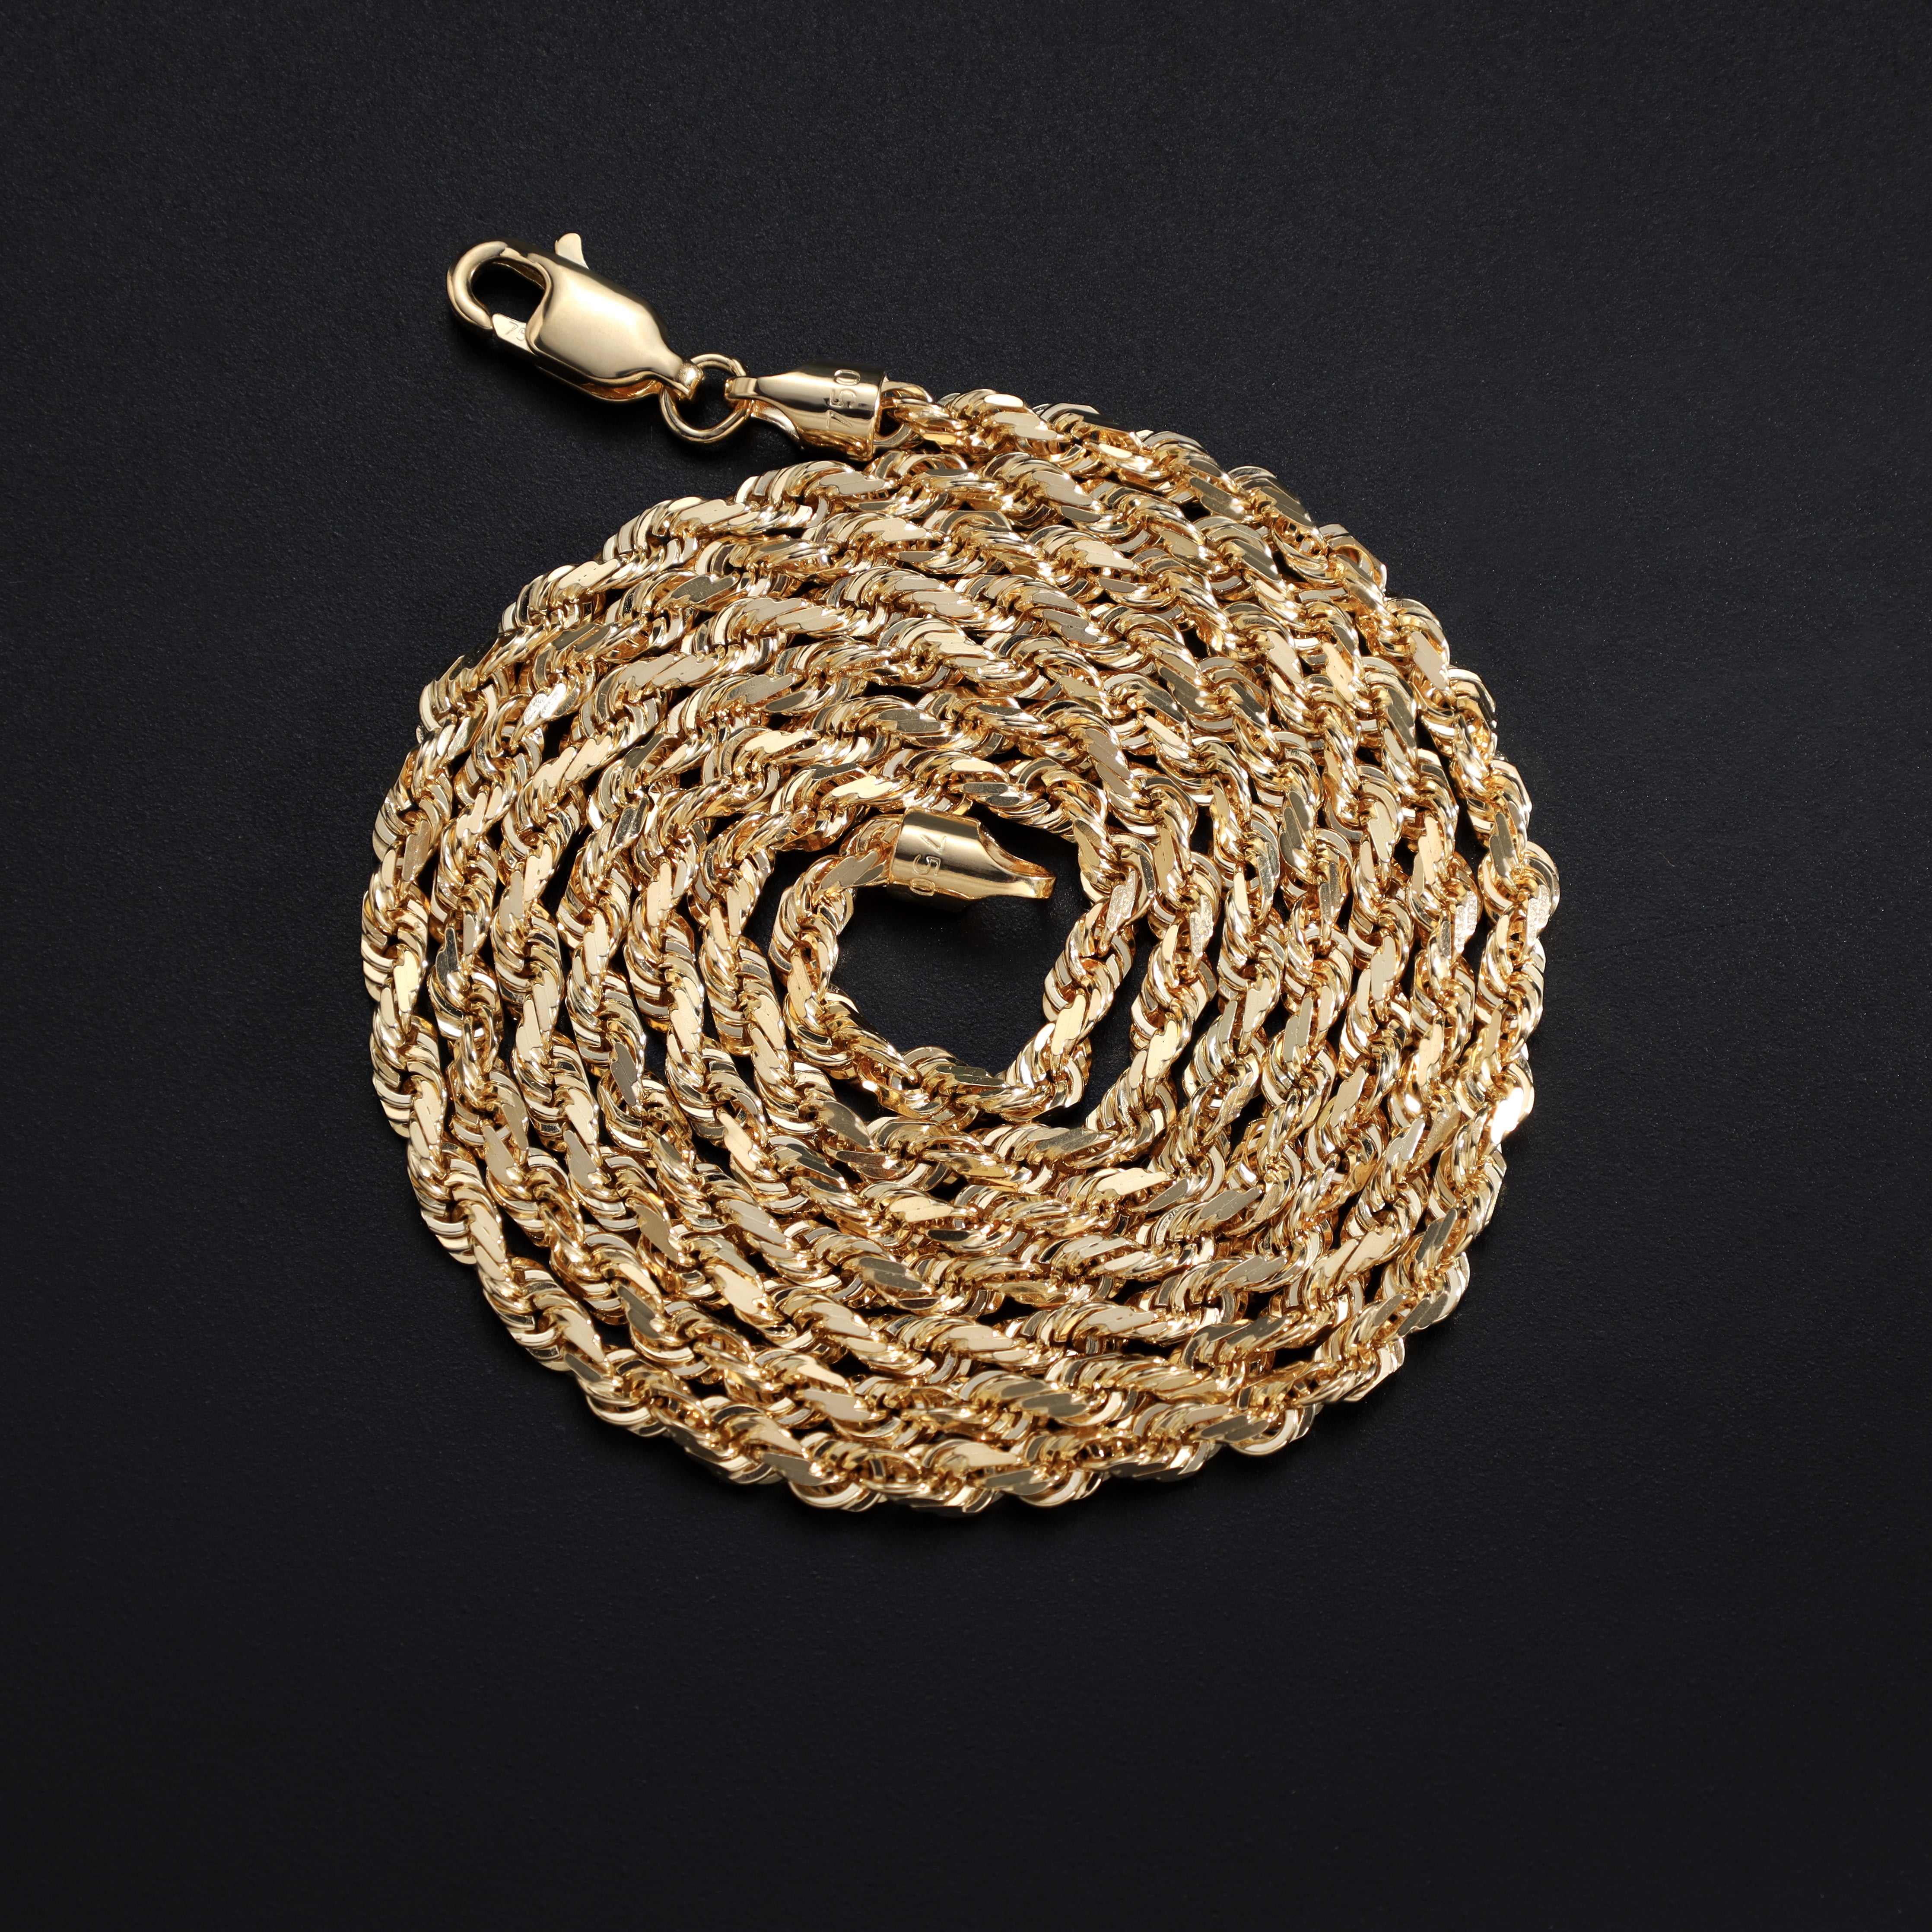 18K 750 Gold Kordelkette Rope Chain 2,7mm breit 55cm lang - Taipan Schmuck